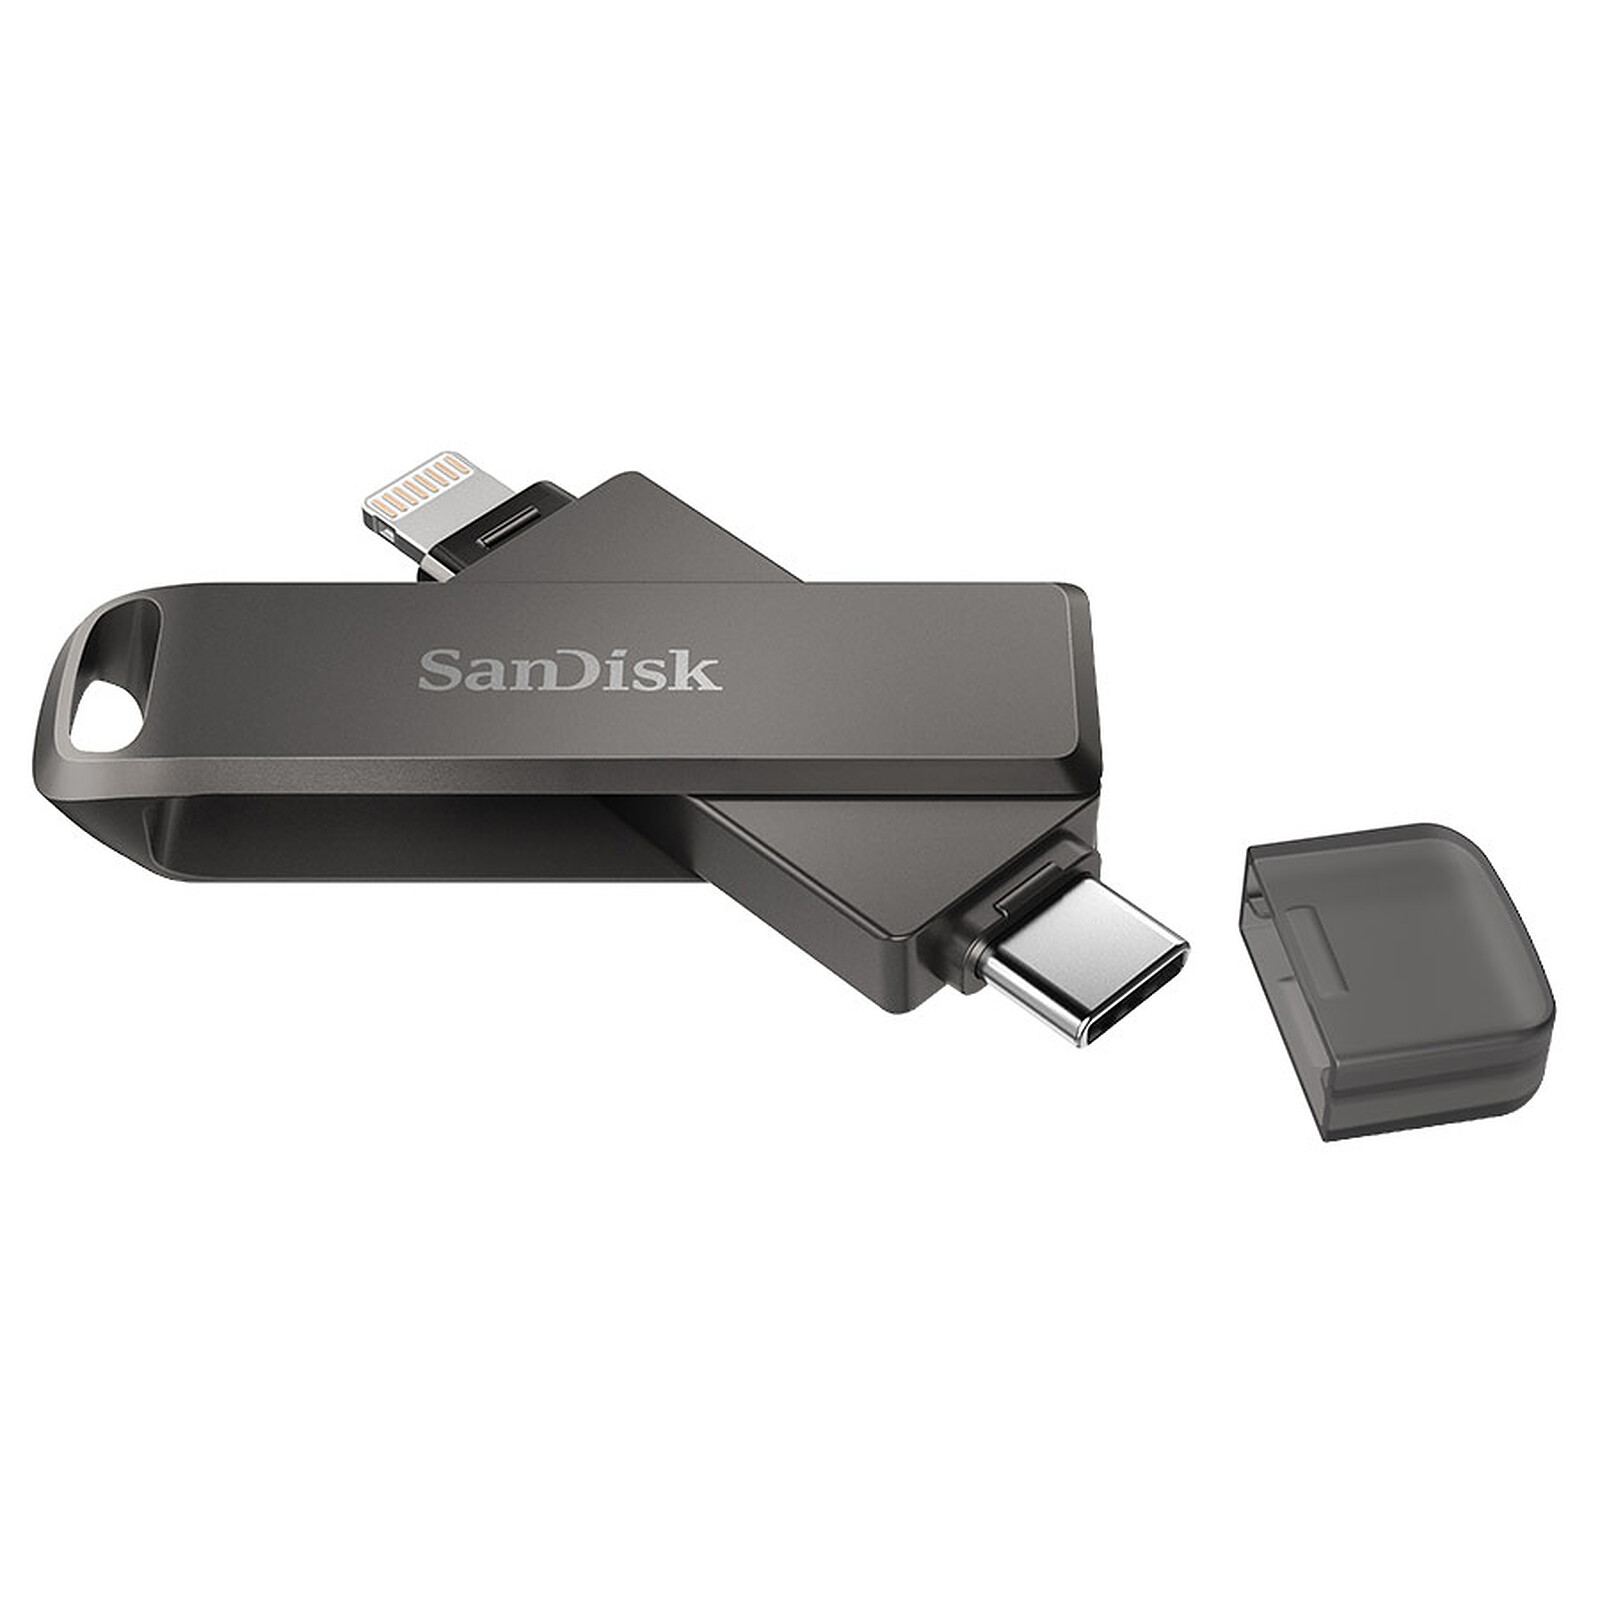 Clé USB 64Go - Marque Sandisk Cruzer Blade USB 2.0 Flash Drive